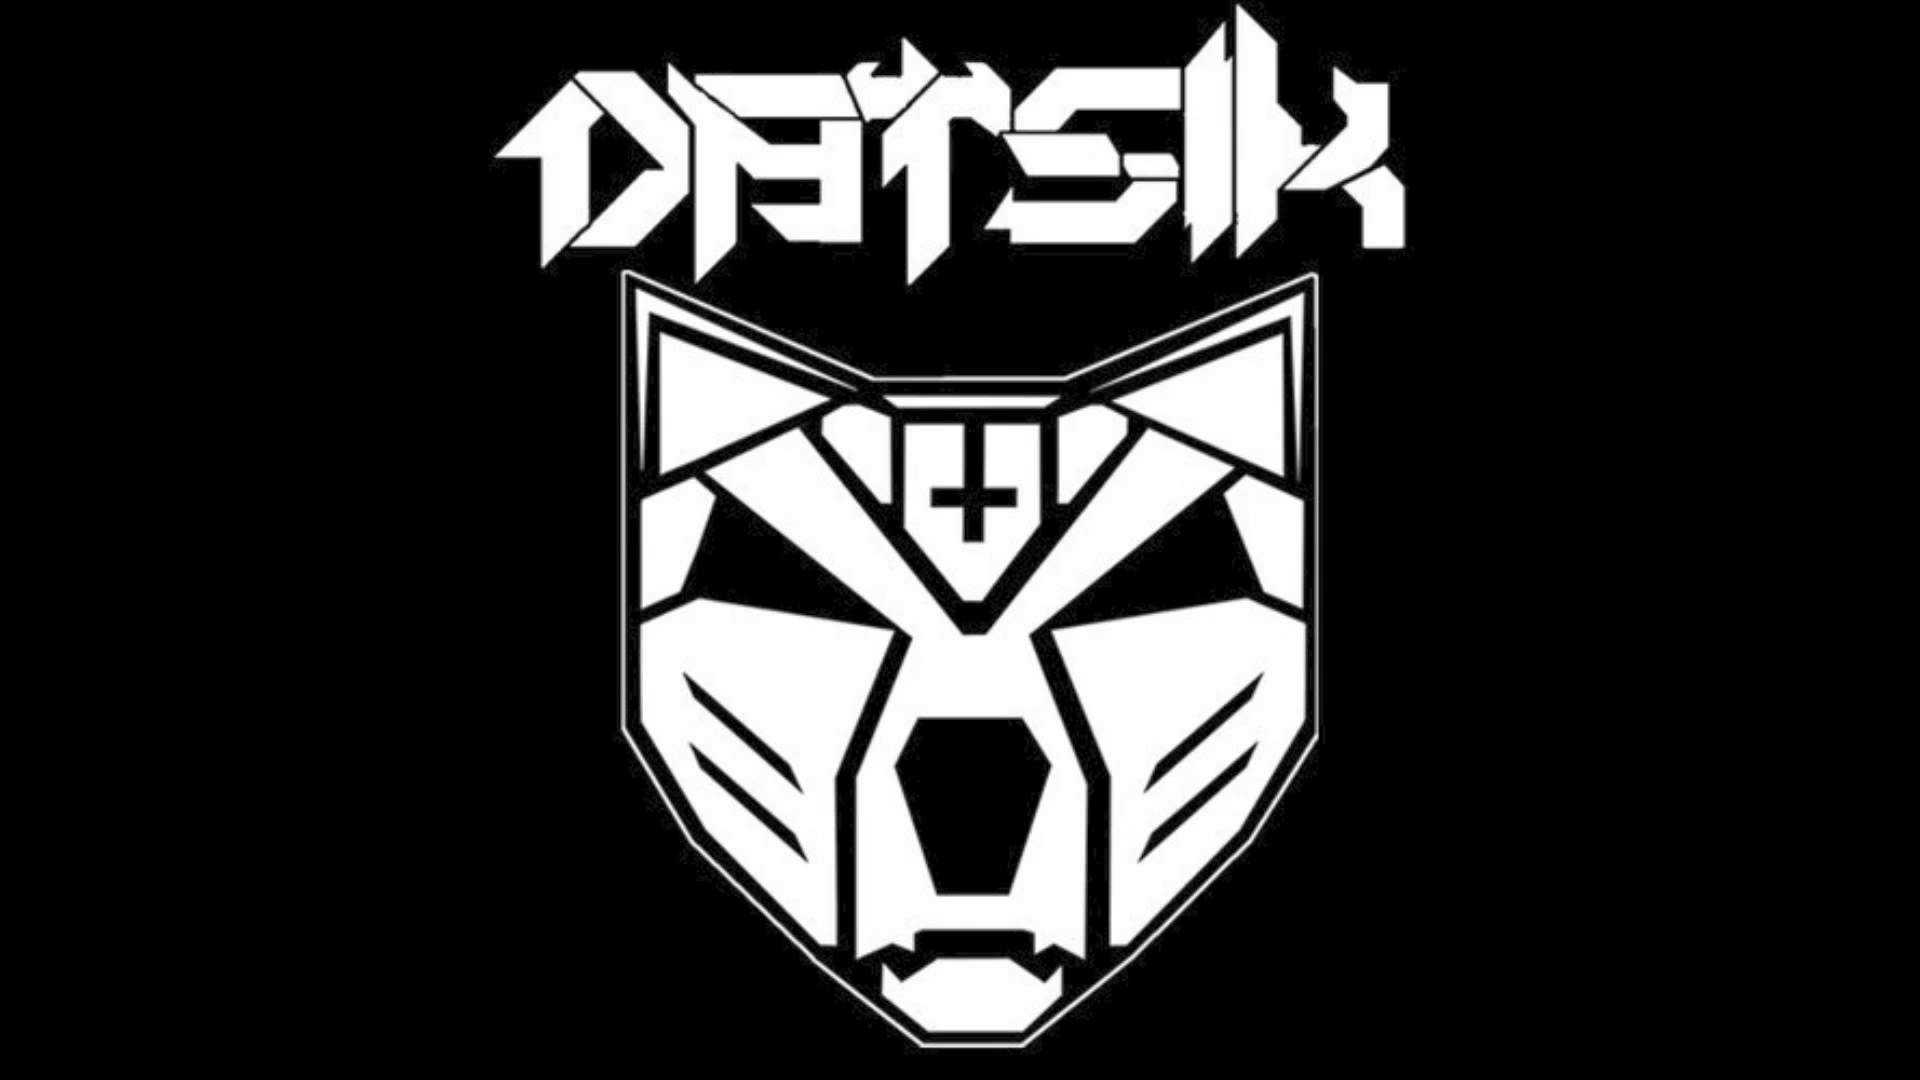 1920x1080 Datsik Logo Wallpaper | hasselhoff Image Gallery of Datsik Logo Wallpaper  ...